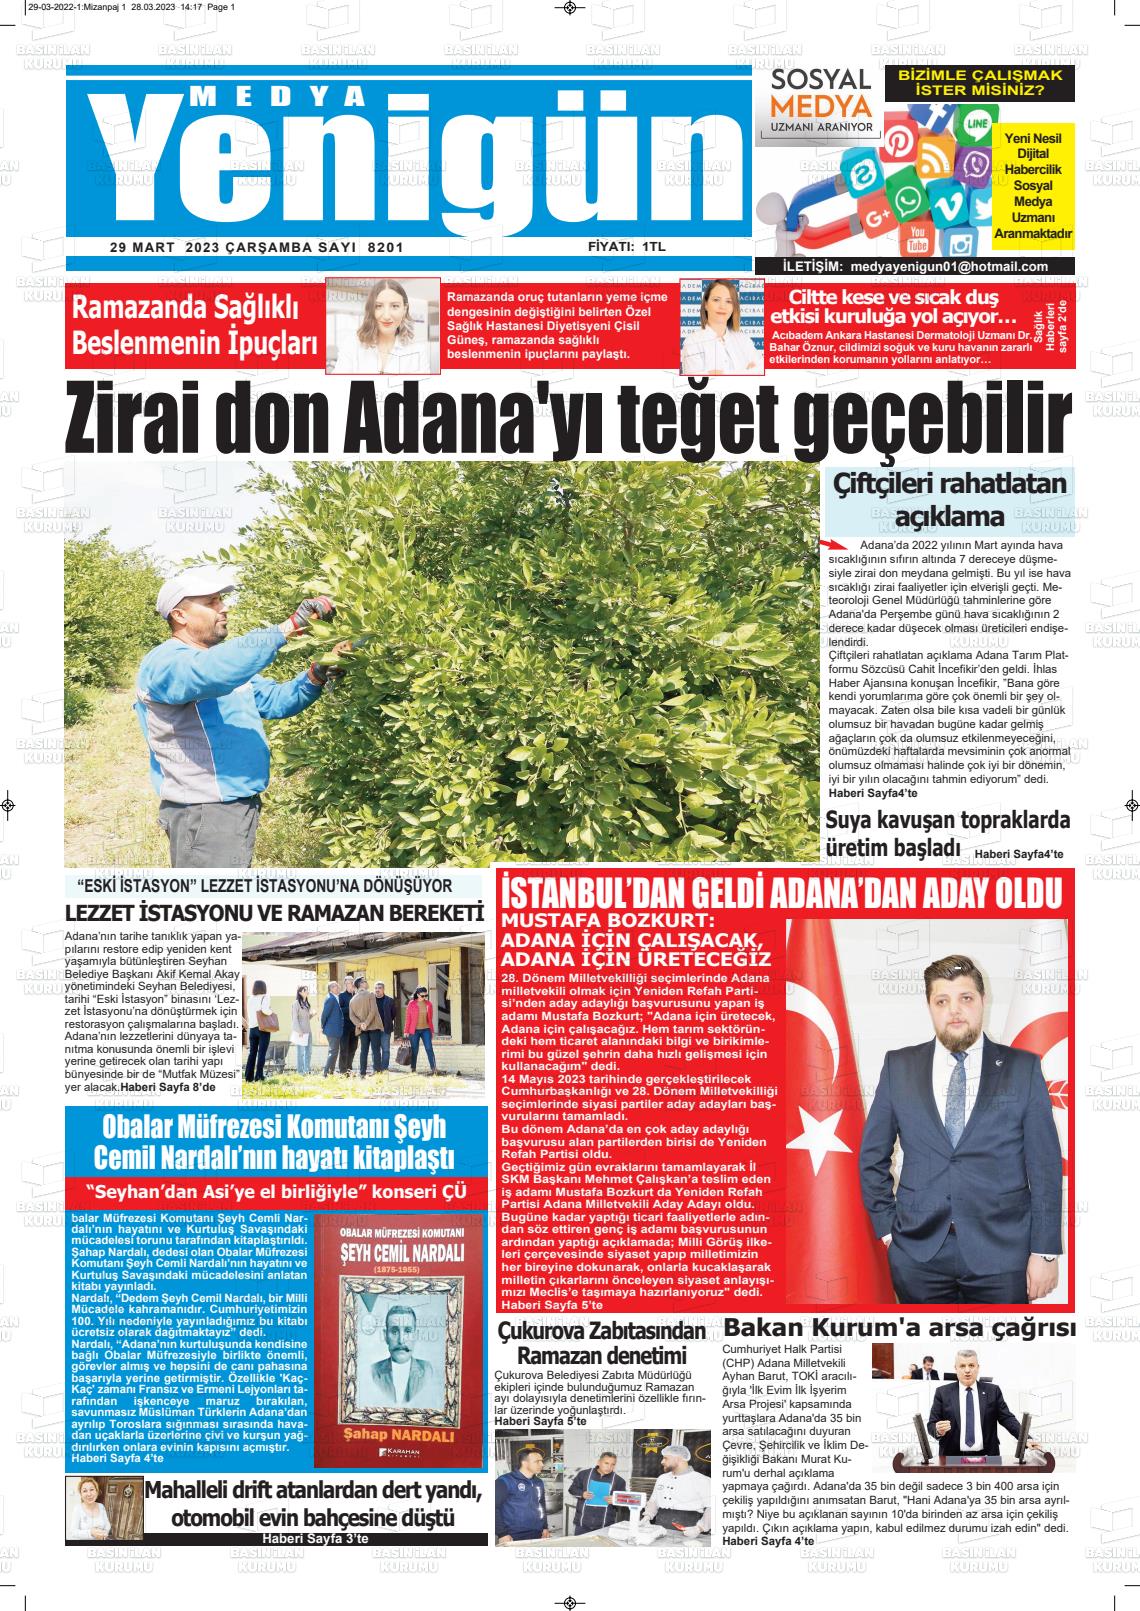 29 Mart 2023 Medya Yenigün Gazete Manşeti